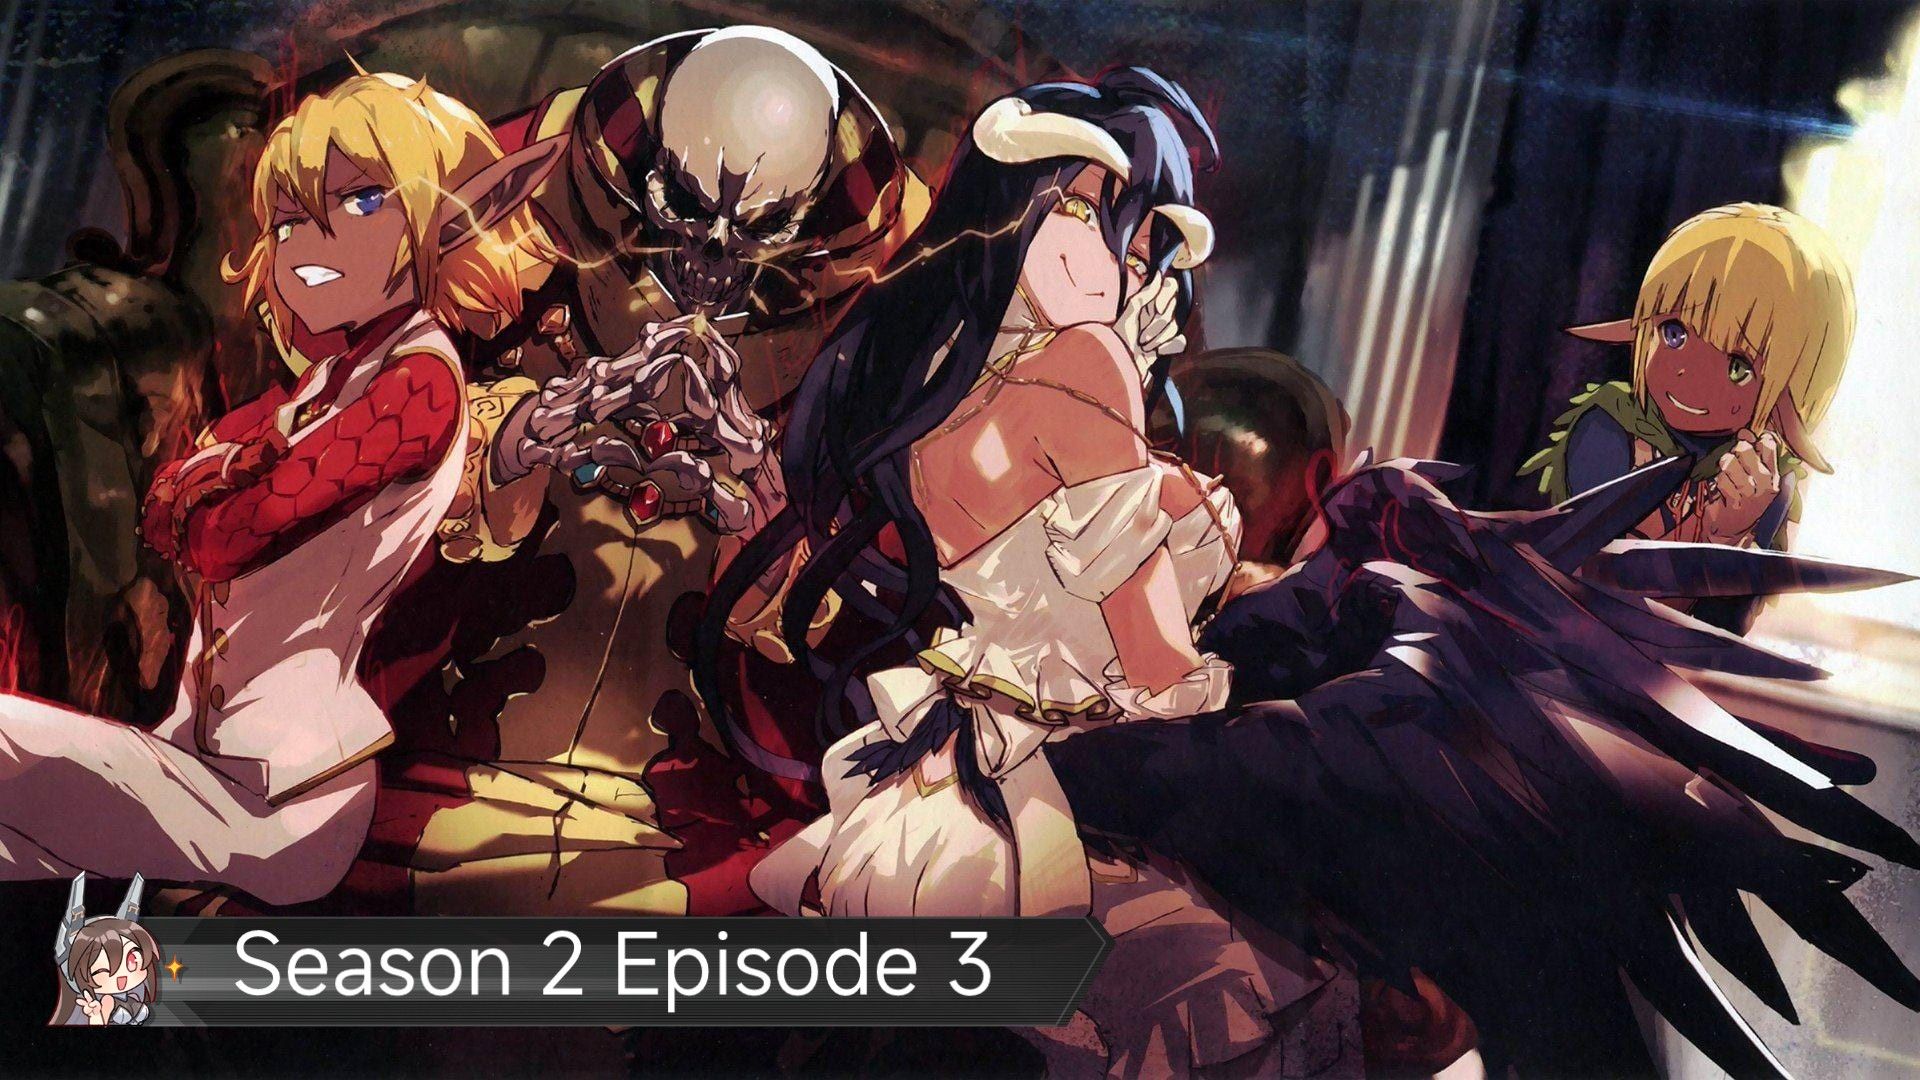 Overlord II  Anime, Anime drawings, Overlord anime season 2